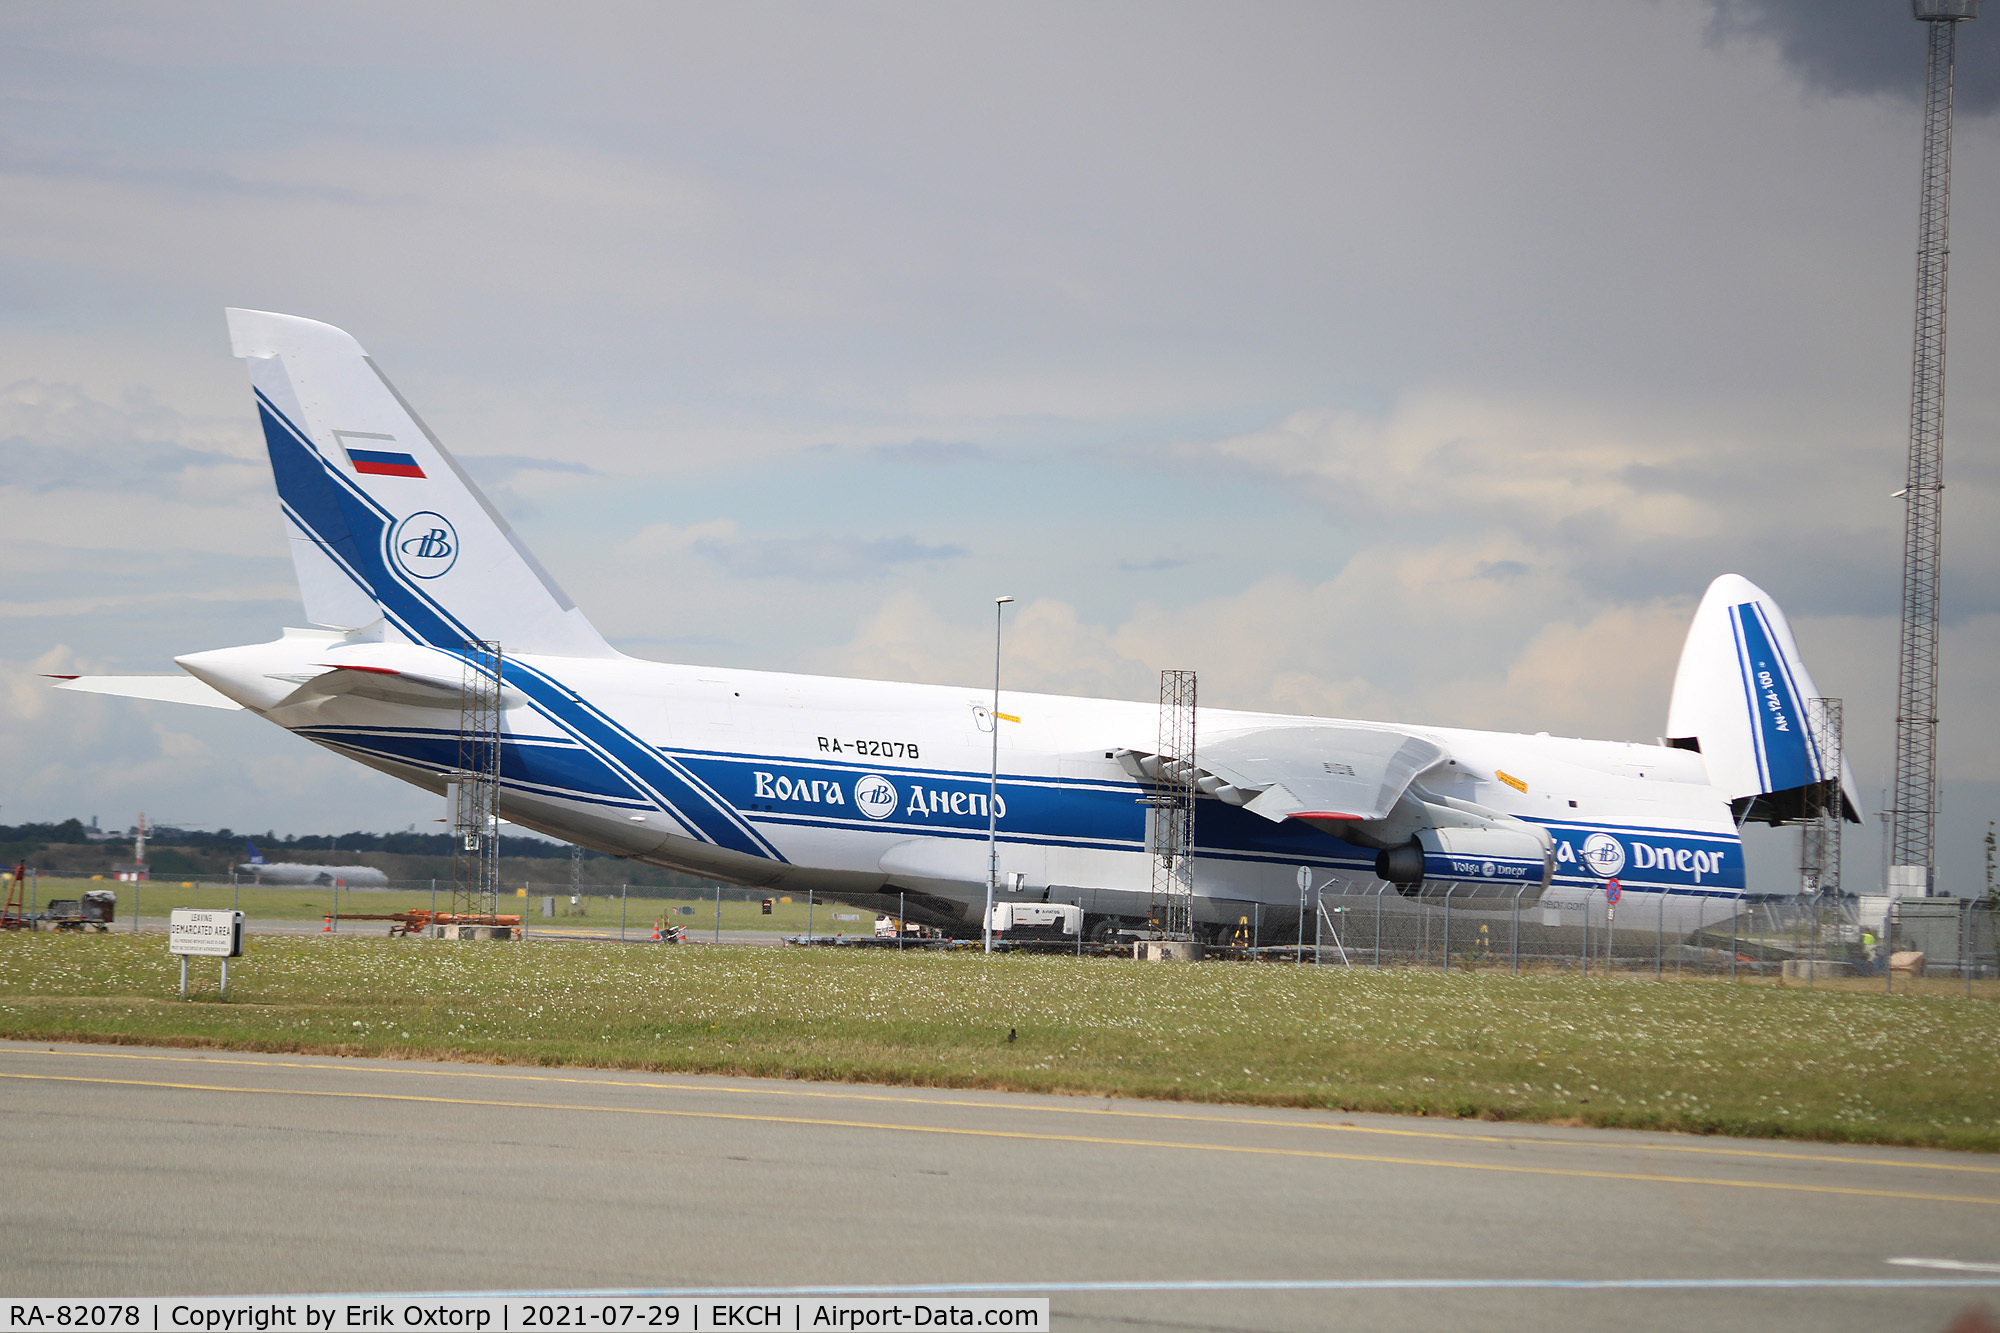 RA-82078, 1996 Antonov An-124-100 Ruslan C/N 9773054559153, RA-82078 in CPH